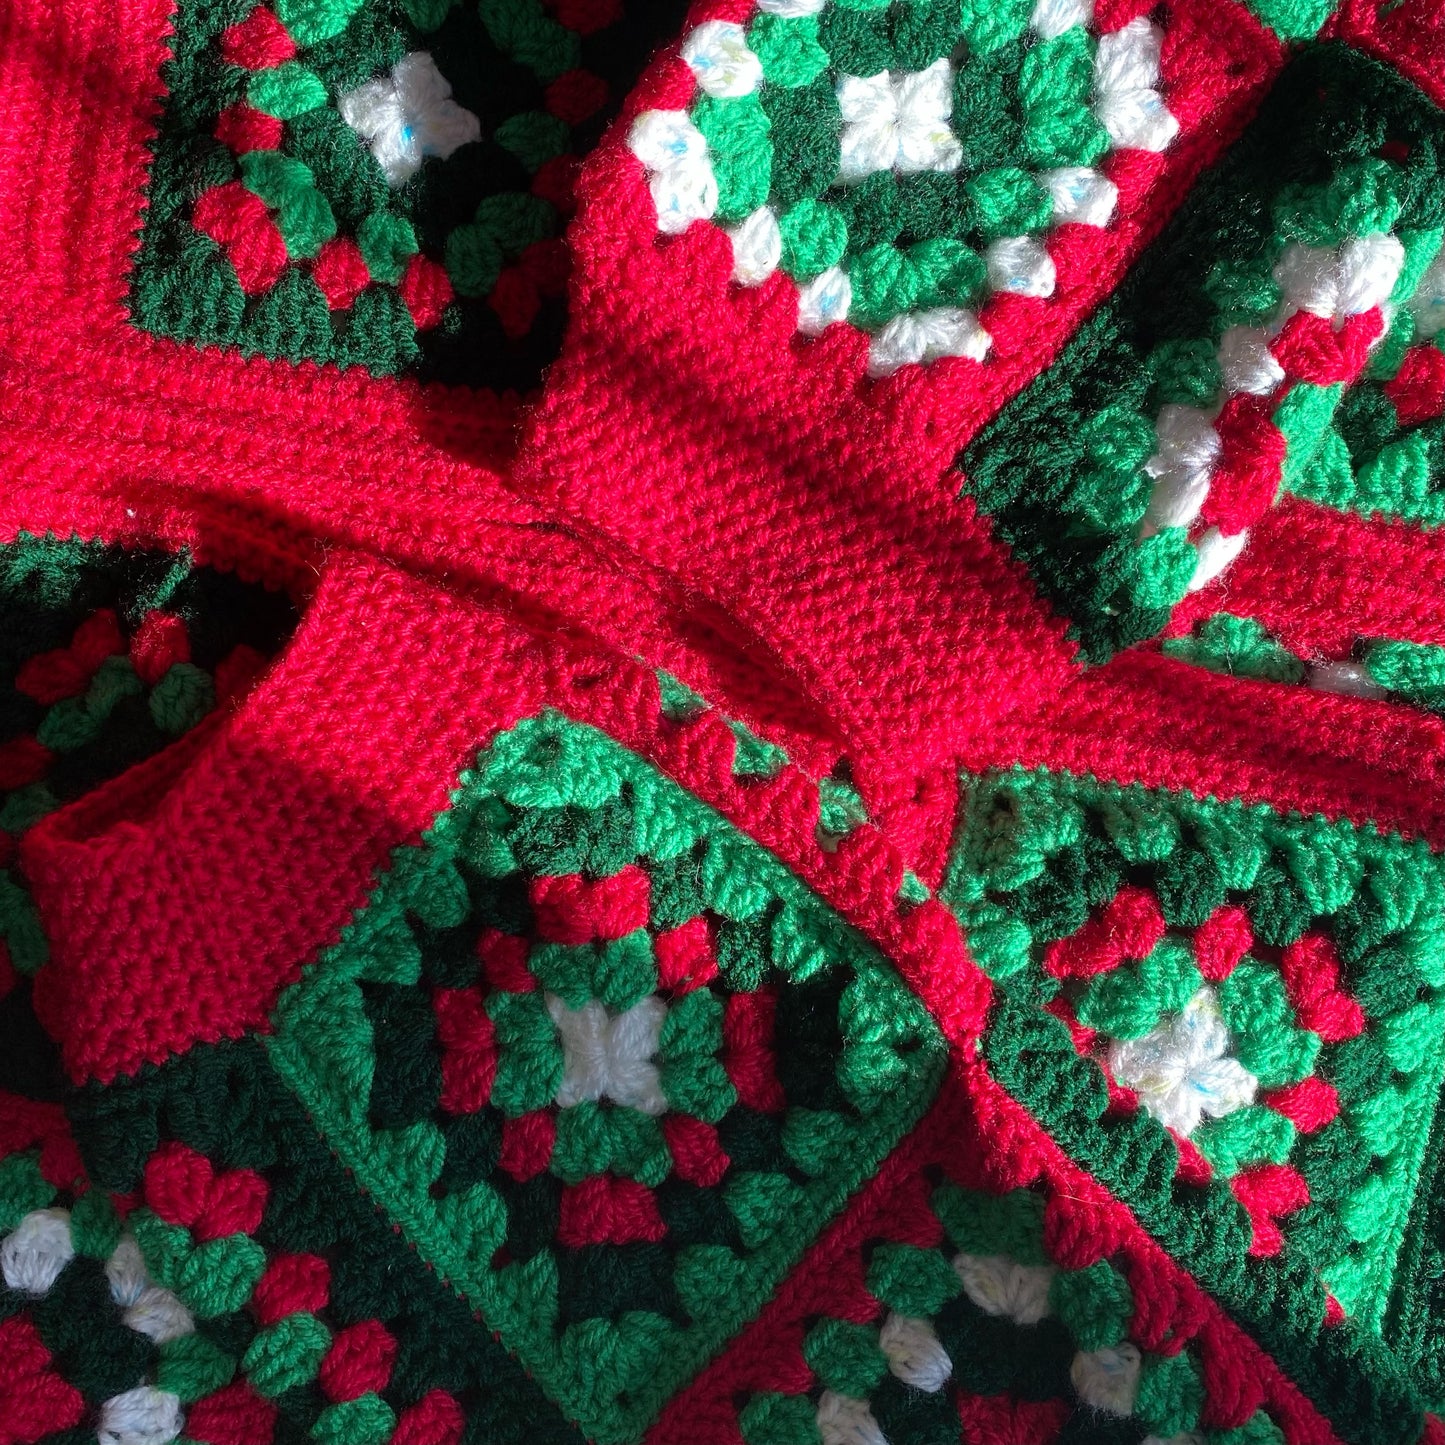 The CHRISTMAS ~ S/M retro 60s 70s handmade in the UK crochet granny square cardigan